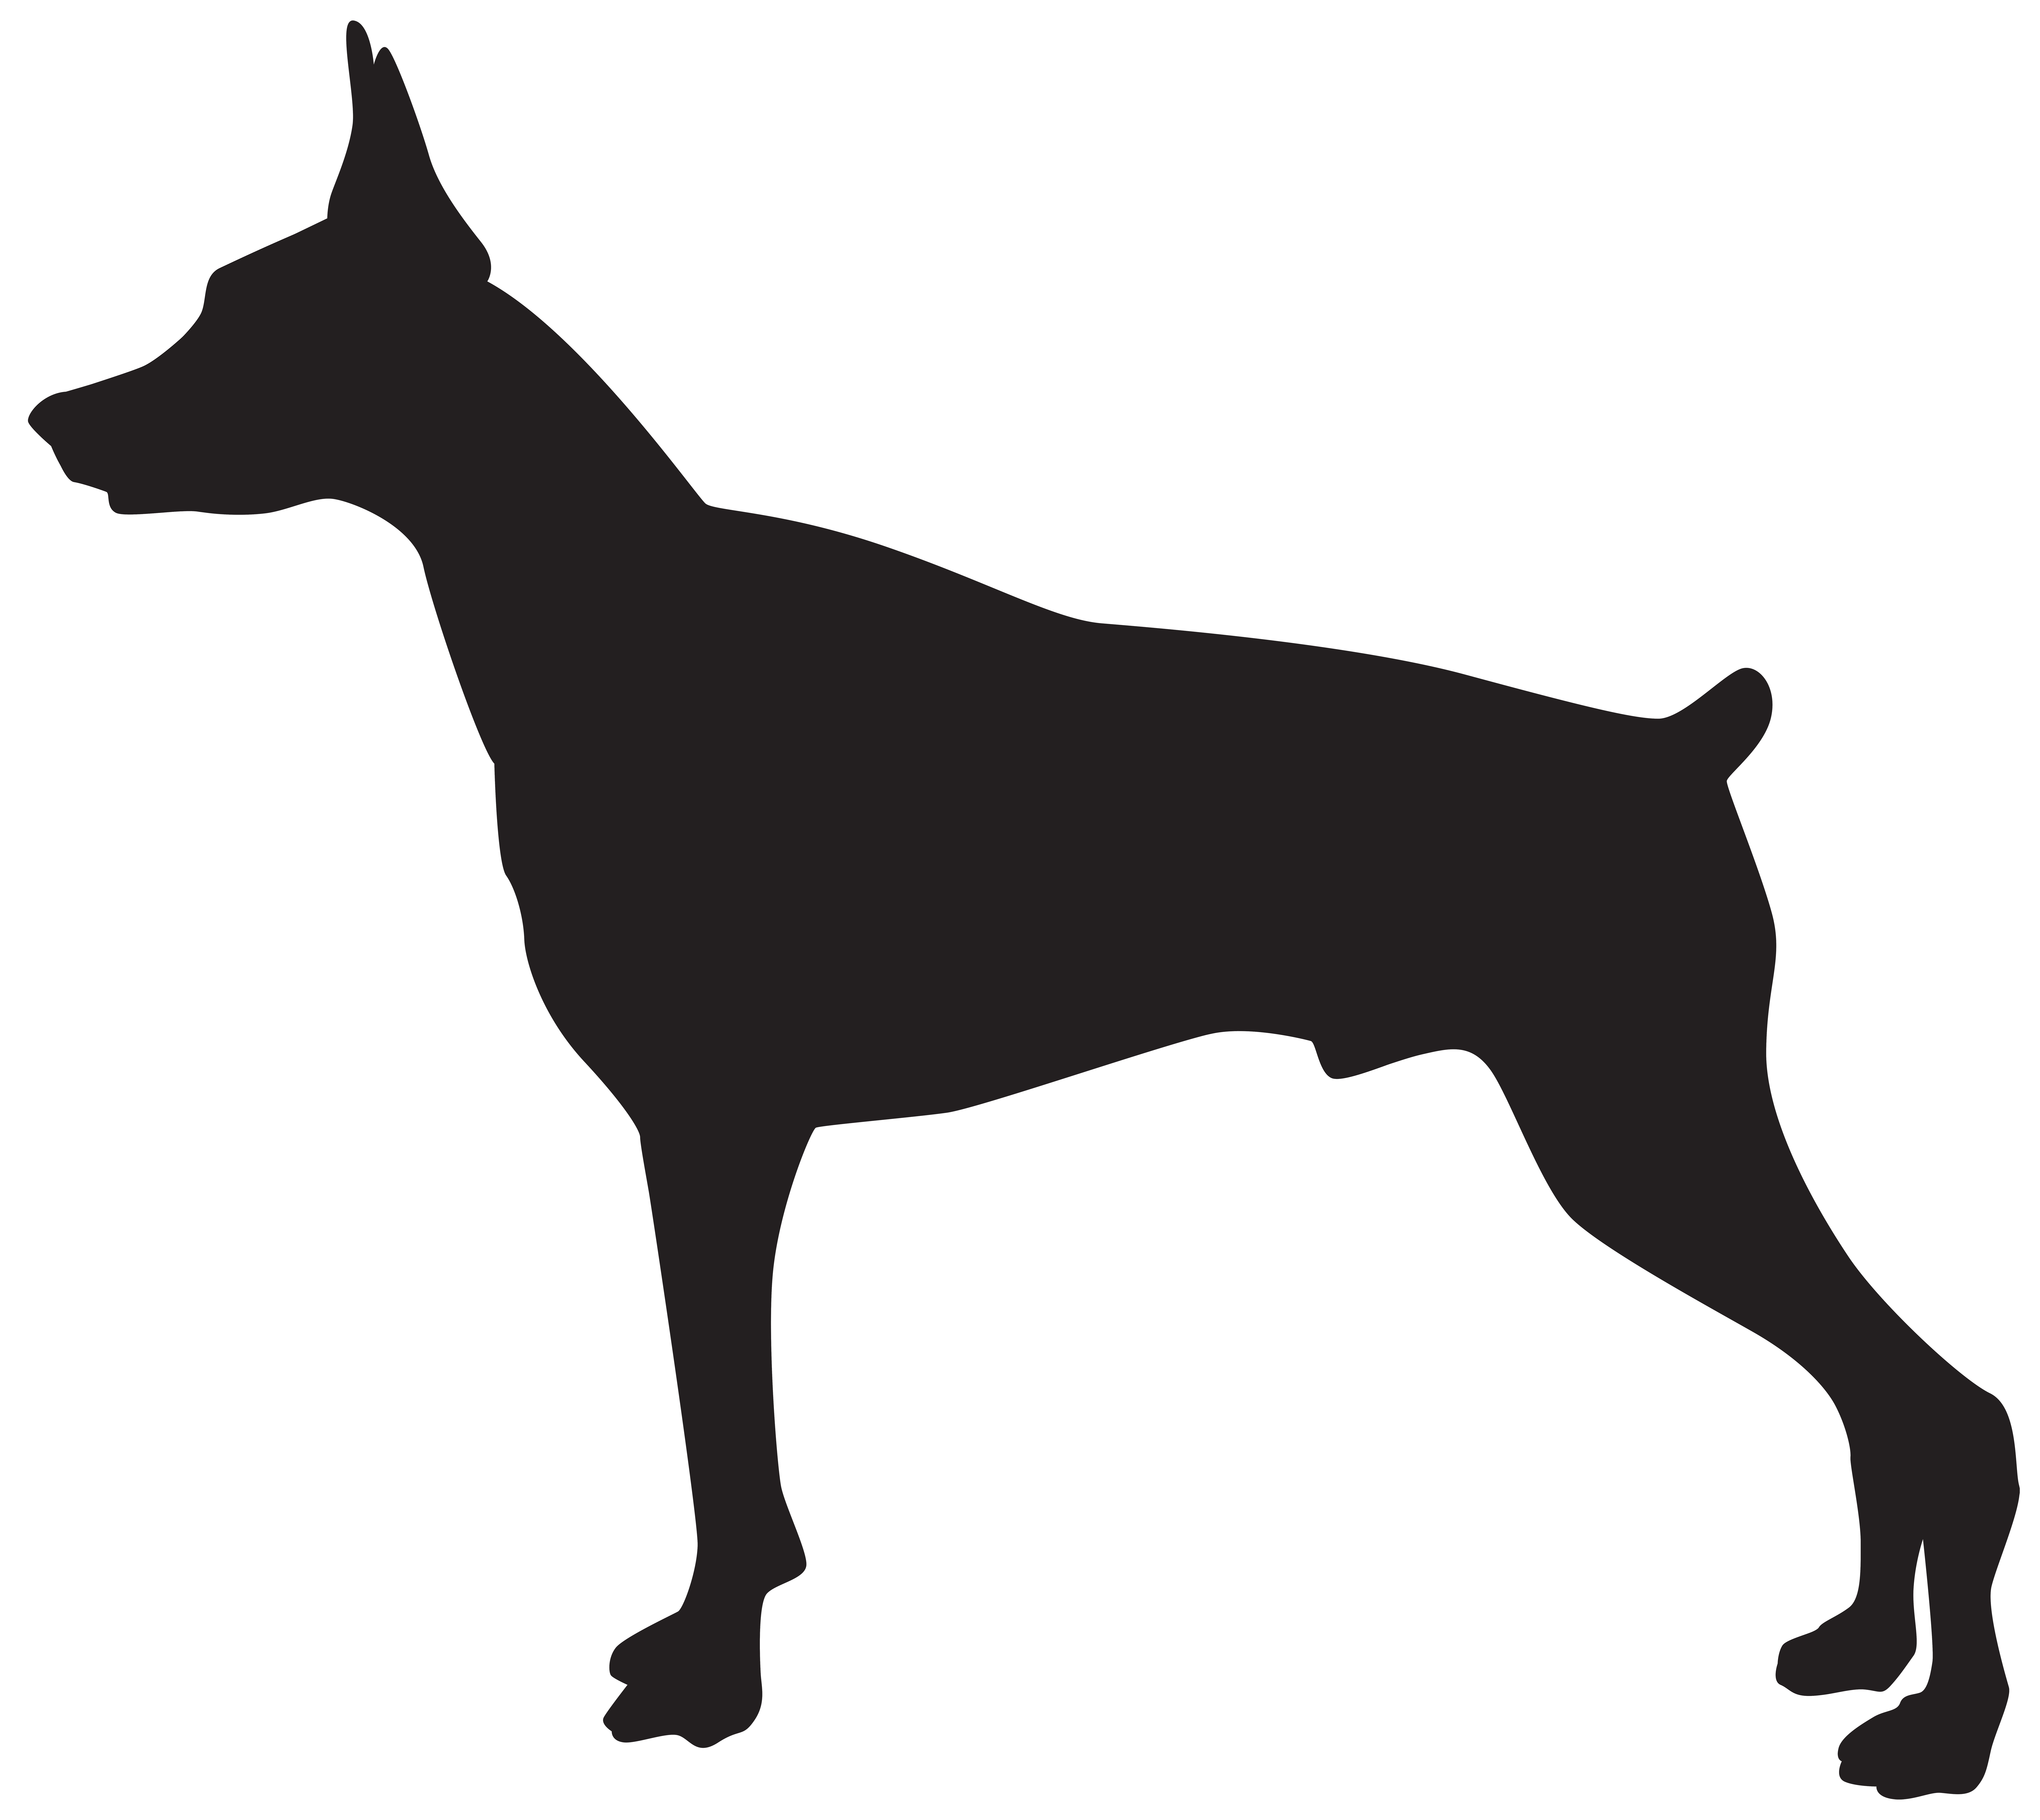 Doberman Dog Silhouette PNG Transparent Clip Art Image.